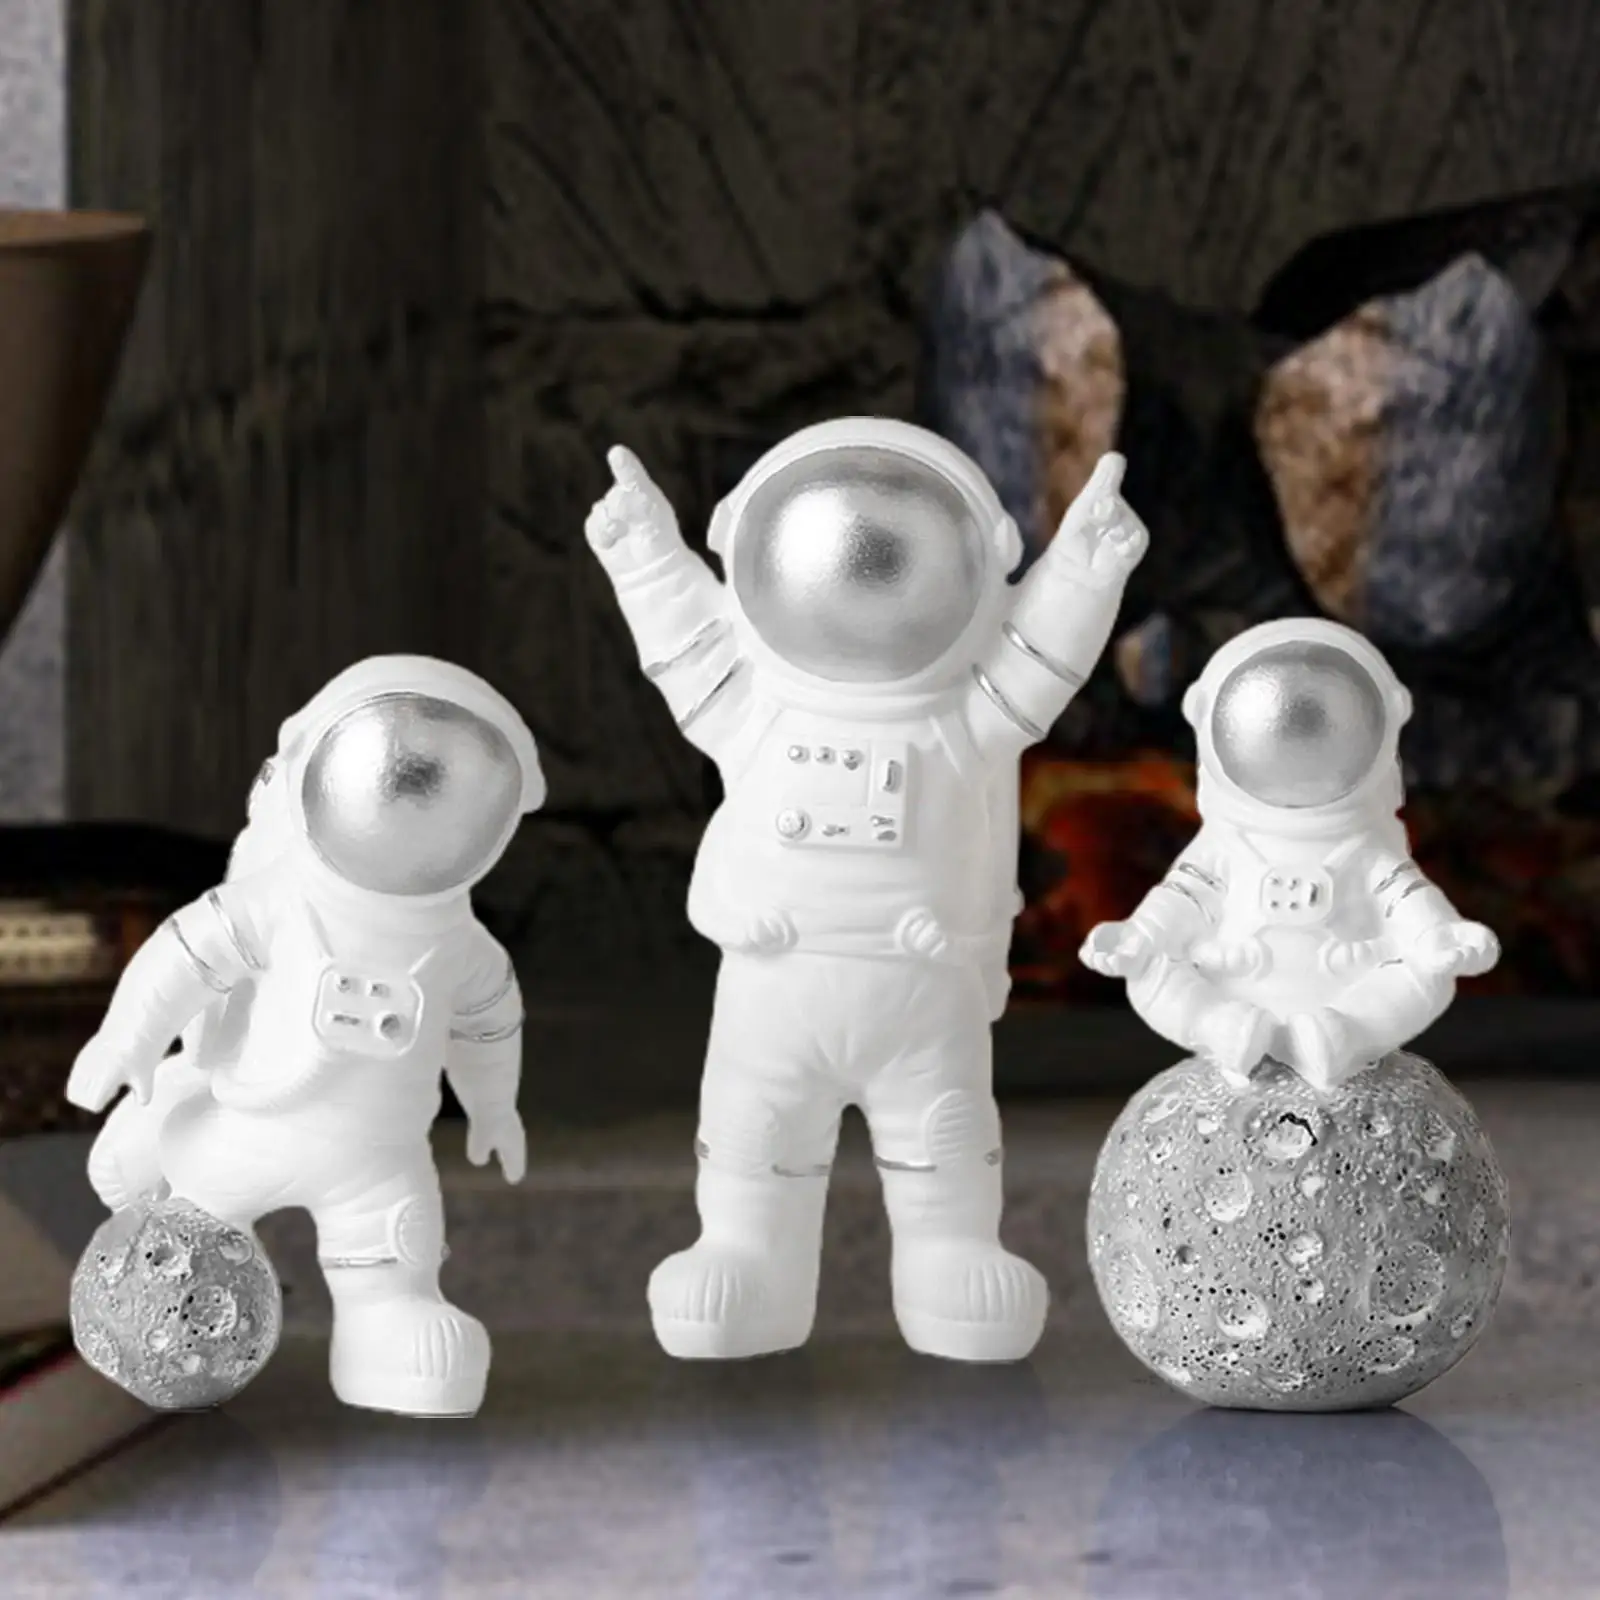 3Pcs Spaceman Figurines Miniatures Resin Craft Astronaut Statue Ornament